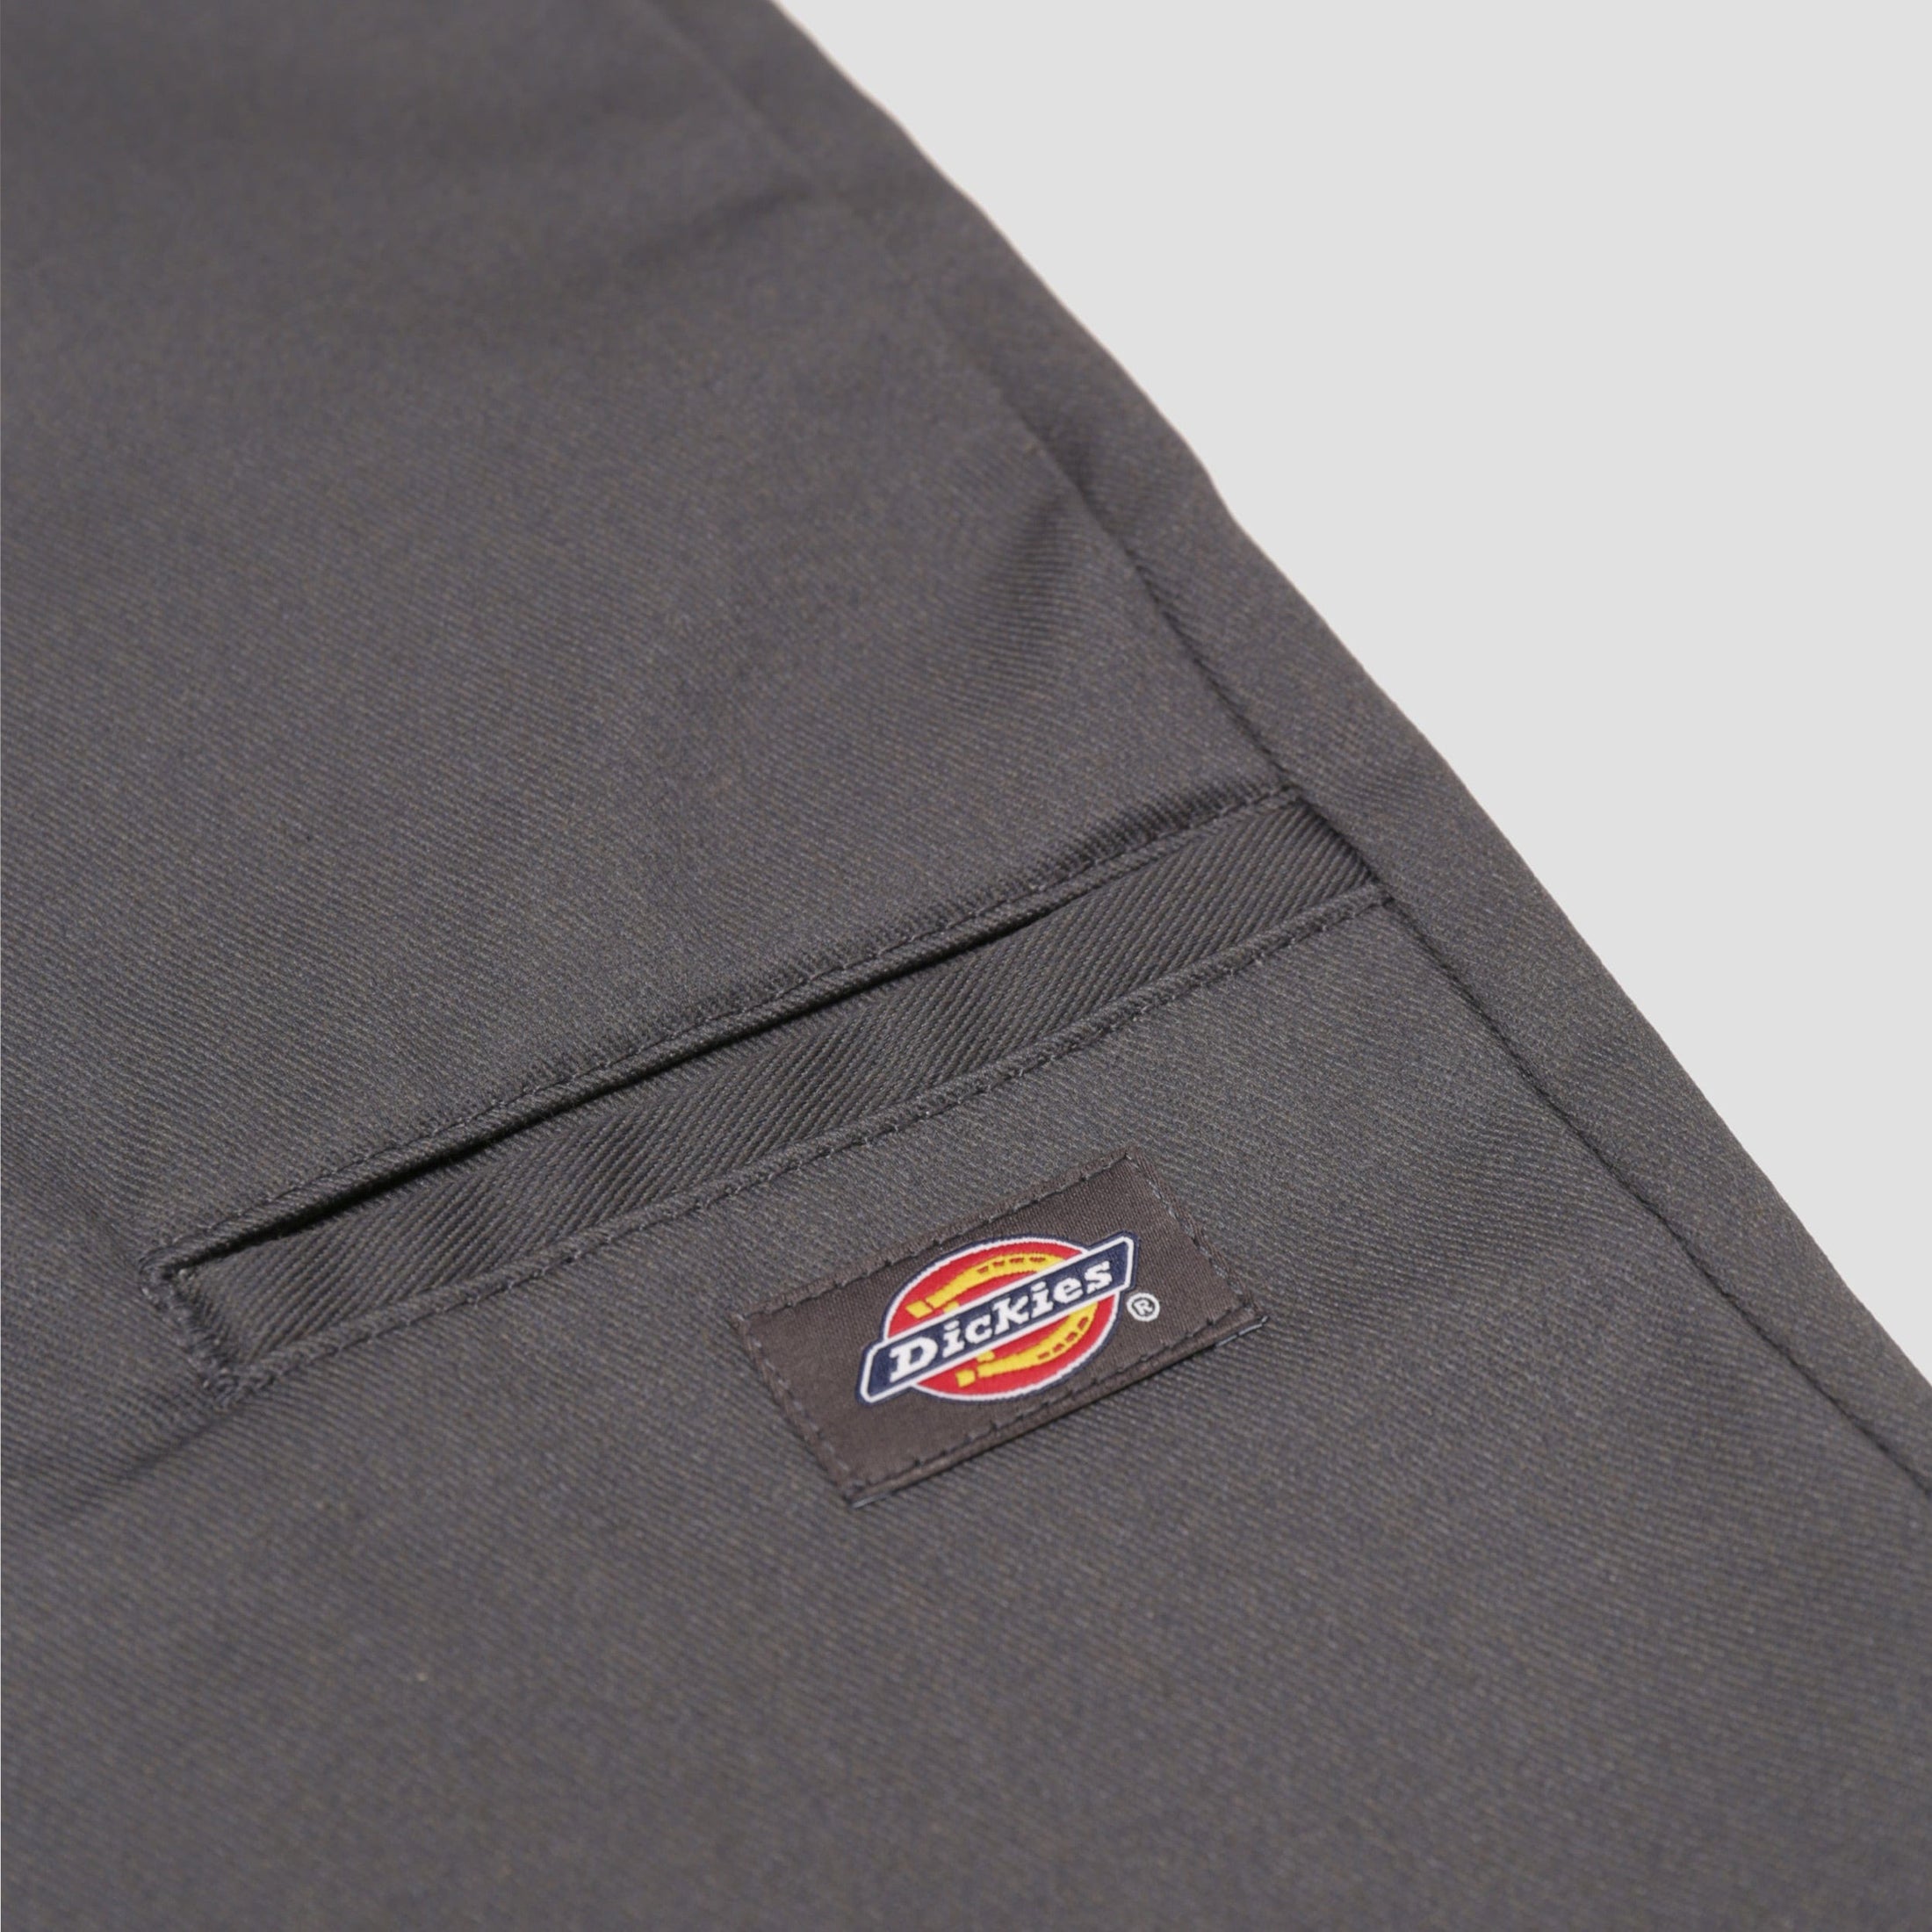 Dickies 13 Inch Multi Pocket Work Shorts Charcoal Grey